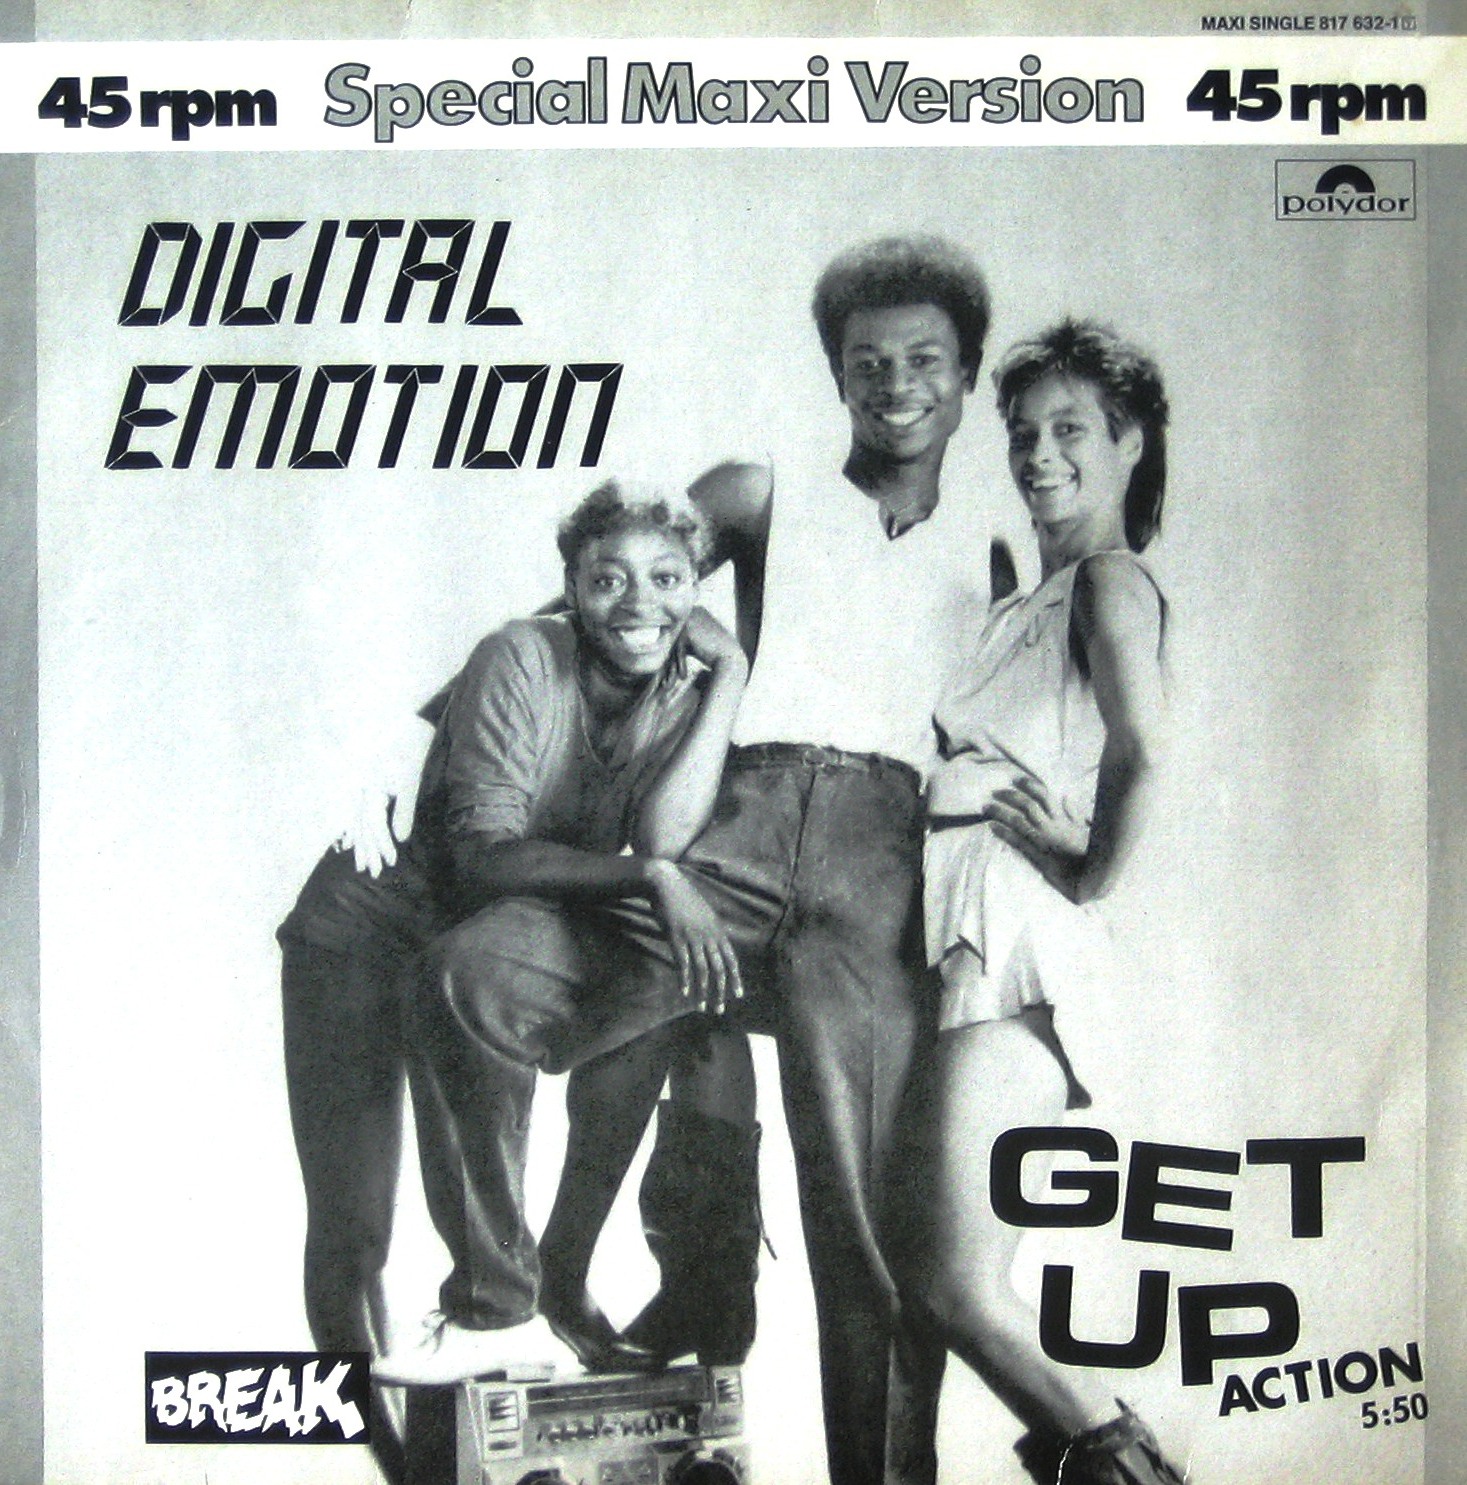 Get up all good. Группа Digital emotion. Digital emotion get up Action. Digital emotion 1984. Digital emotion Digital emotion 1984.